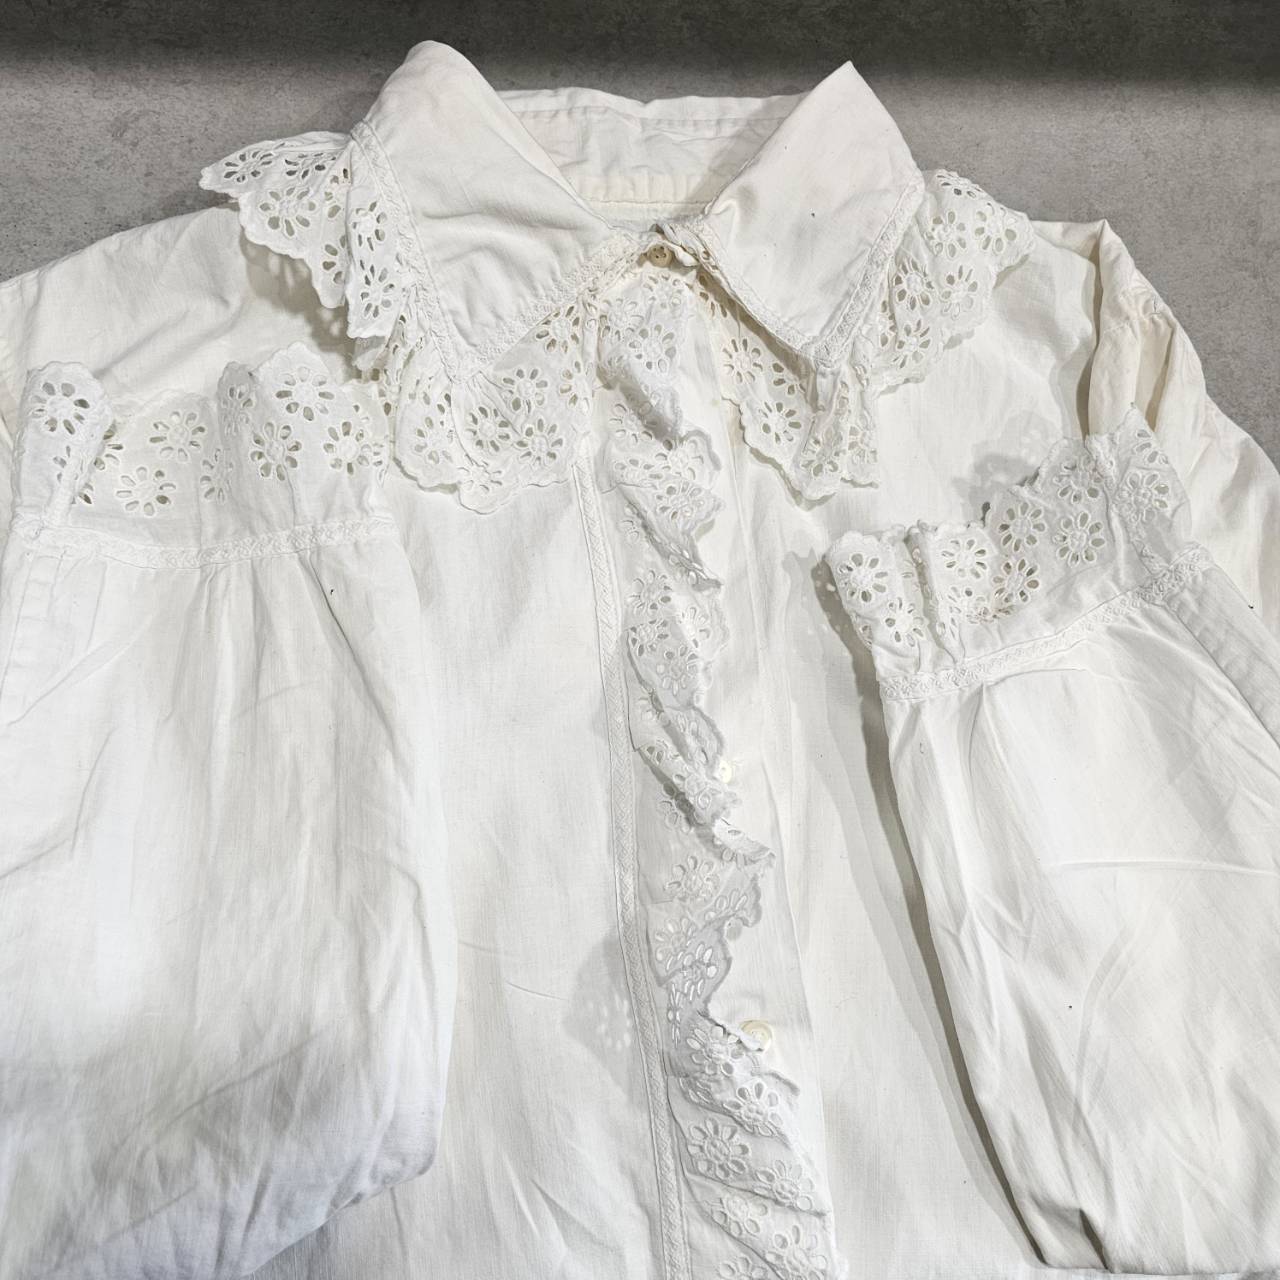 Euro Vintage(ヨーロッパヴィンテージ) tournesol_10'~20's french cotton floral  embroidery blouse/フレンチコットン花刺繍ブラウス 表記なし(Mサイズ程度) ホワイト 貝ボタン